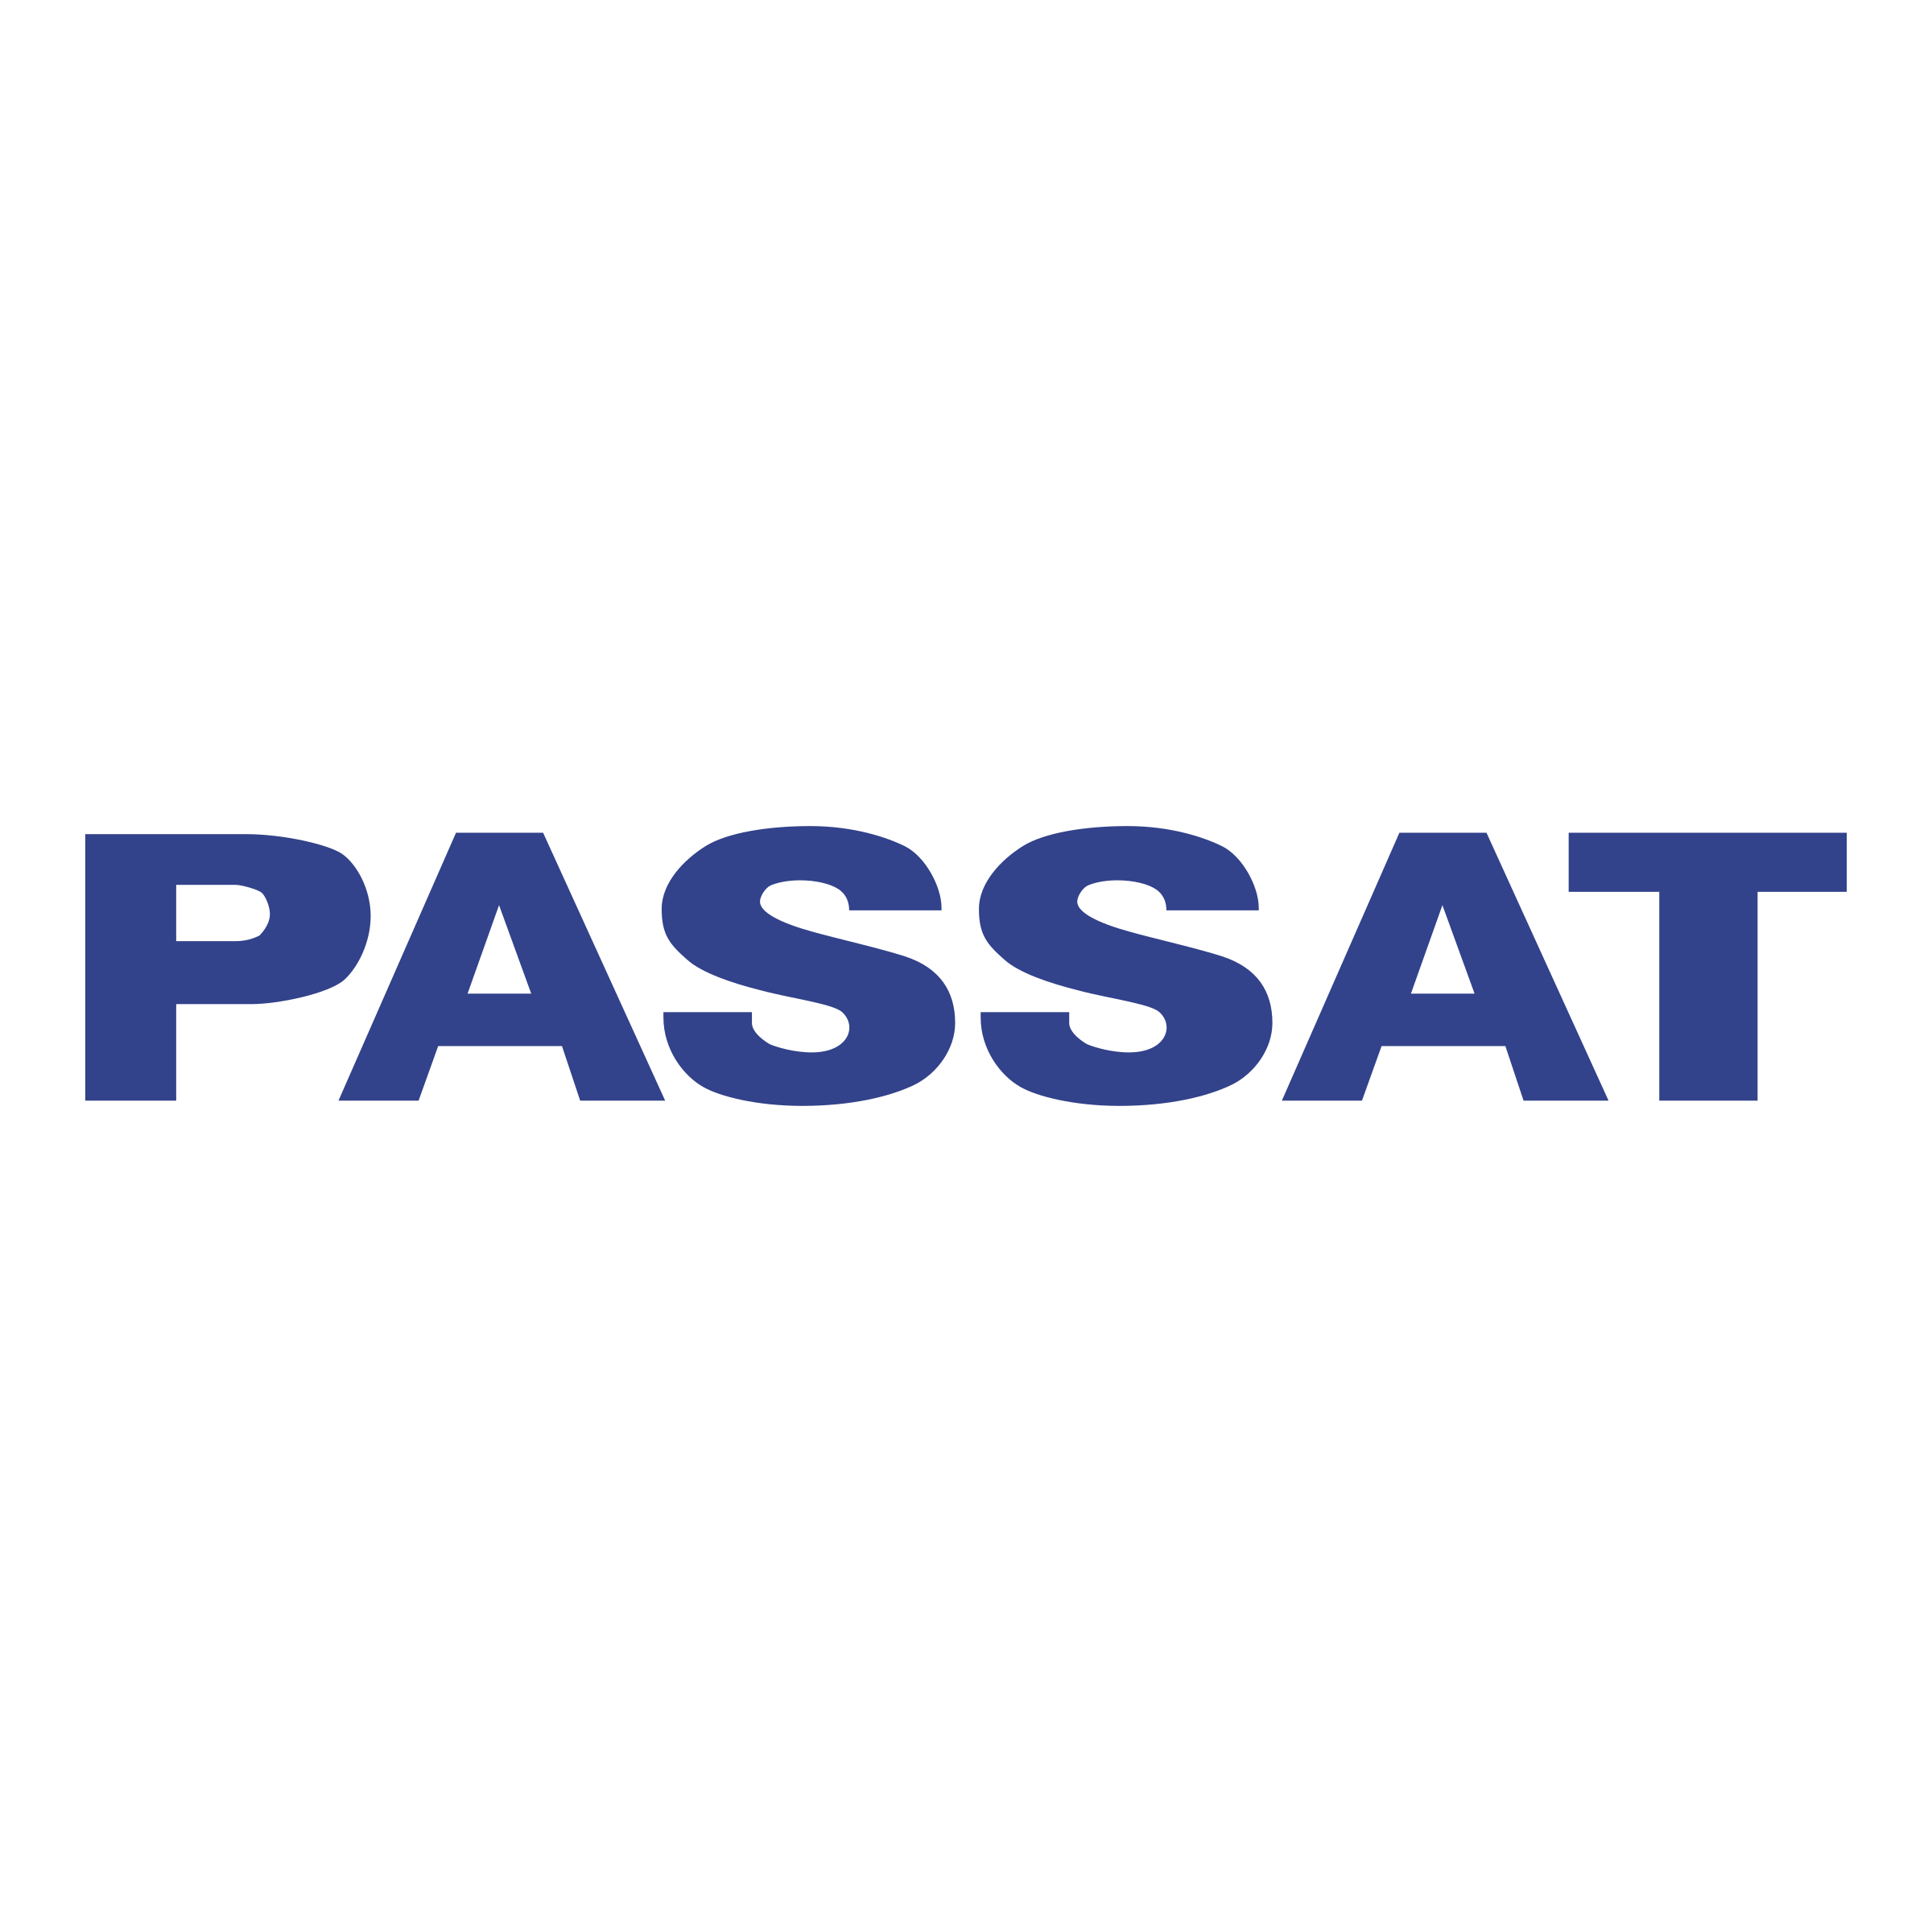 Passat Logo - Passat Logo PNG Transparent & SVG Vector